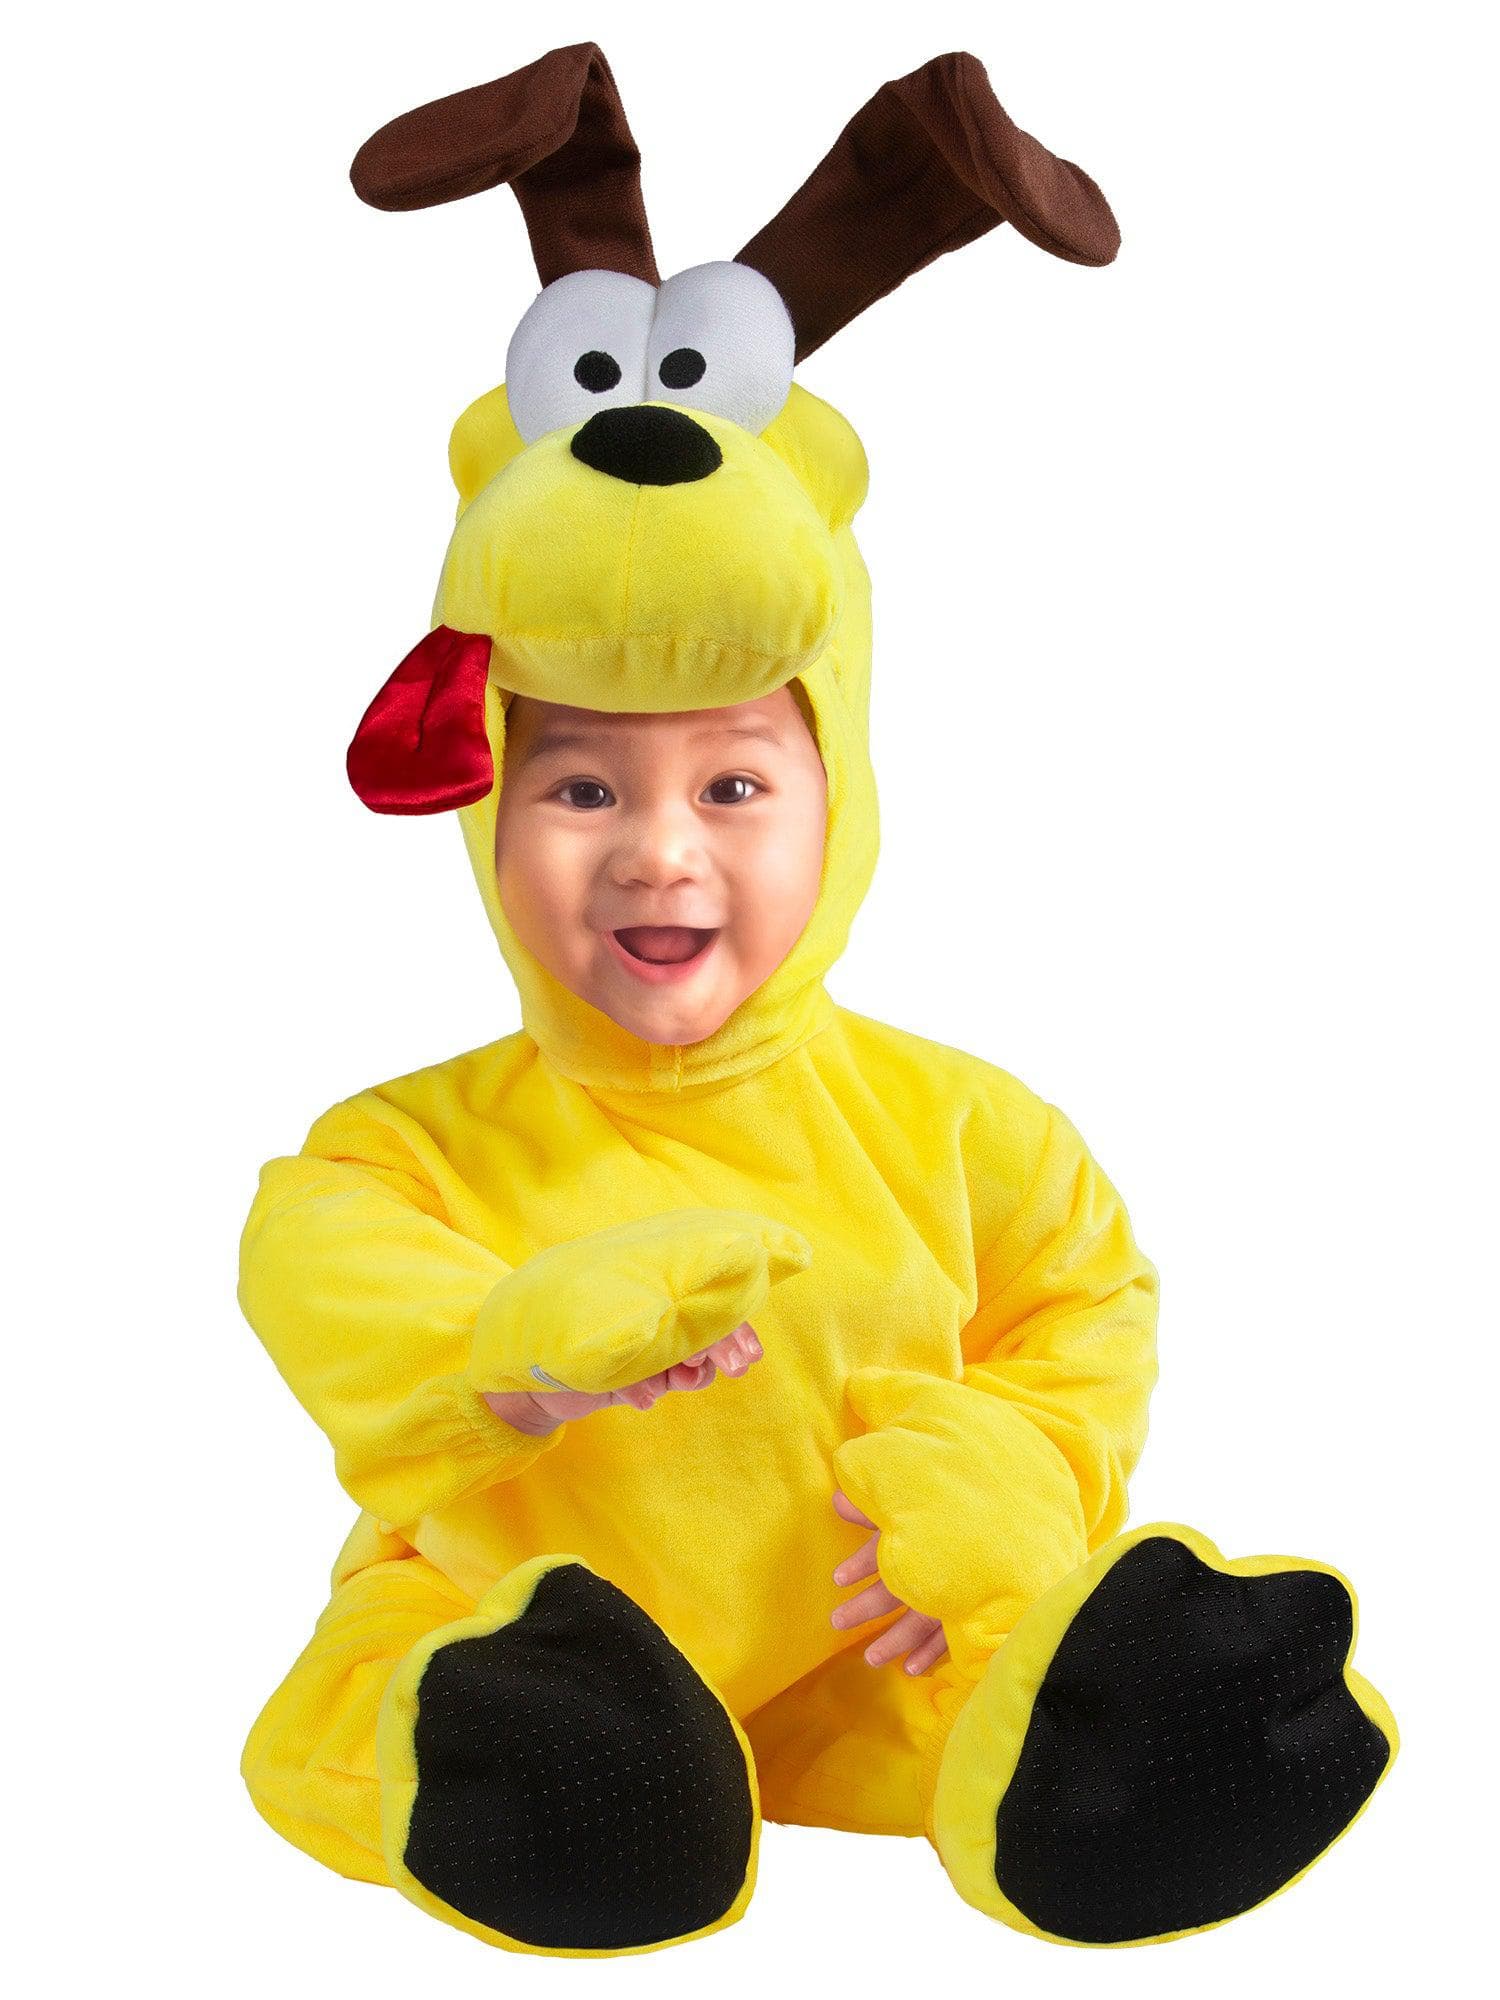 Garfield Odie Baby/Toddler Costume - costumes.com